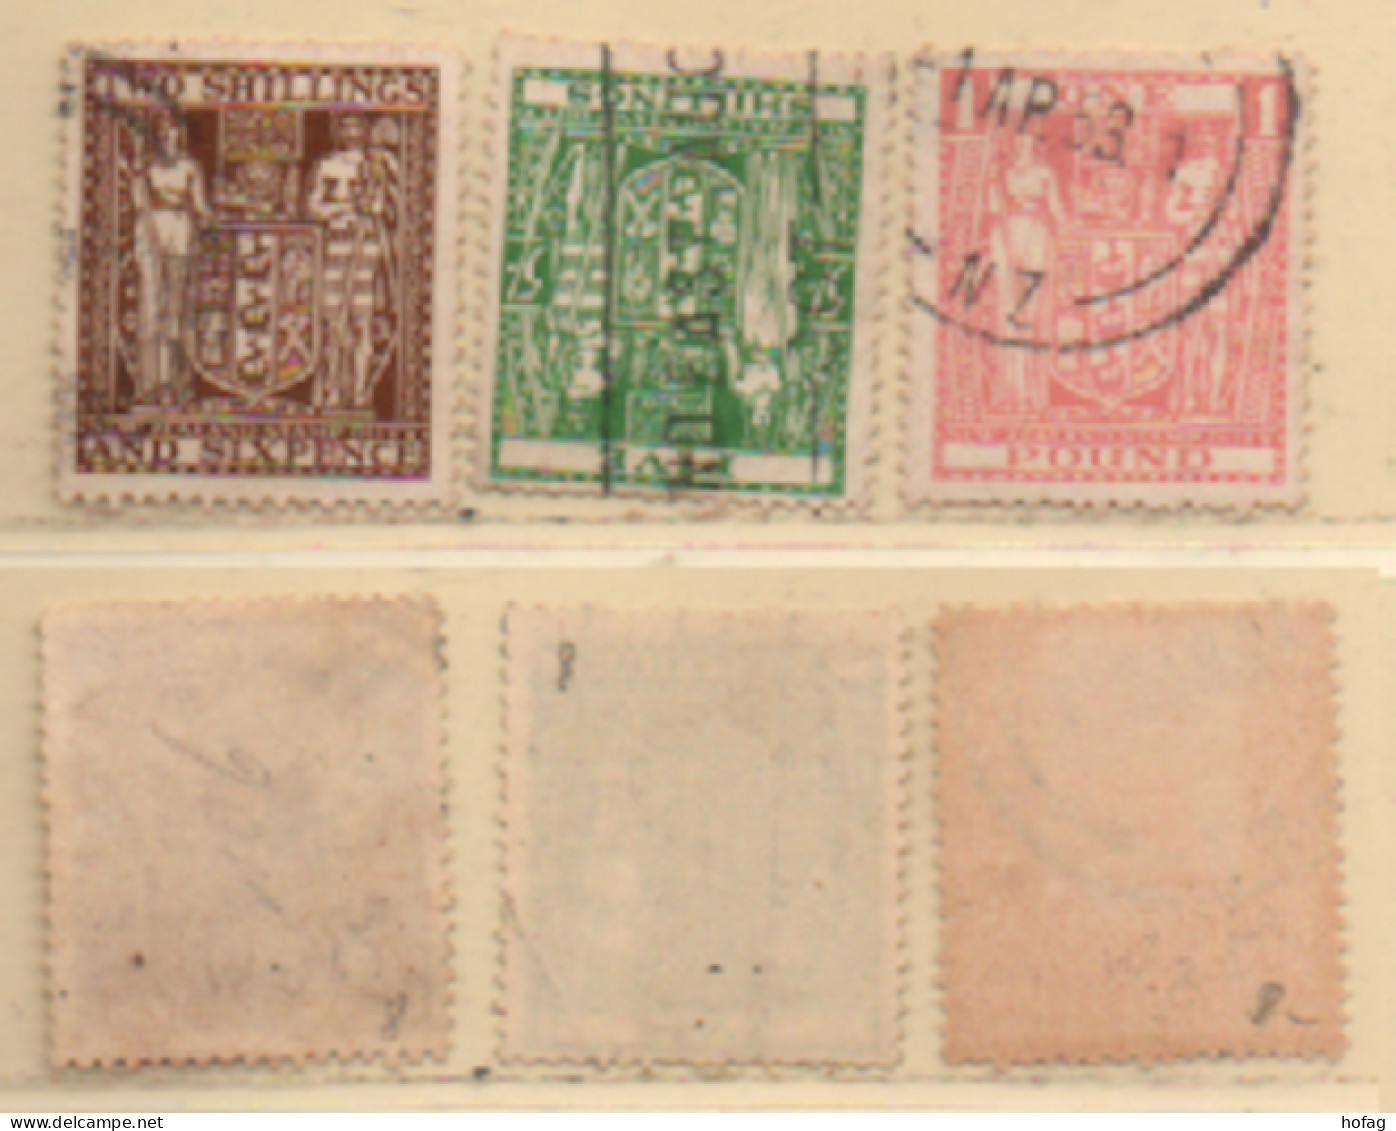 Neuseeland 1943-1945 MiNr.: ST58, ST60, ST67 Stempelmarken Gestempelt New Zealand Stamp Duty Used - Post-fiscaal